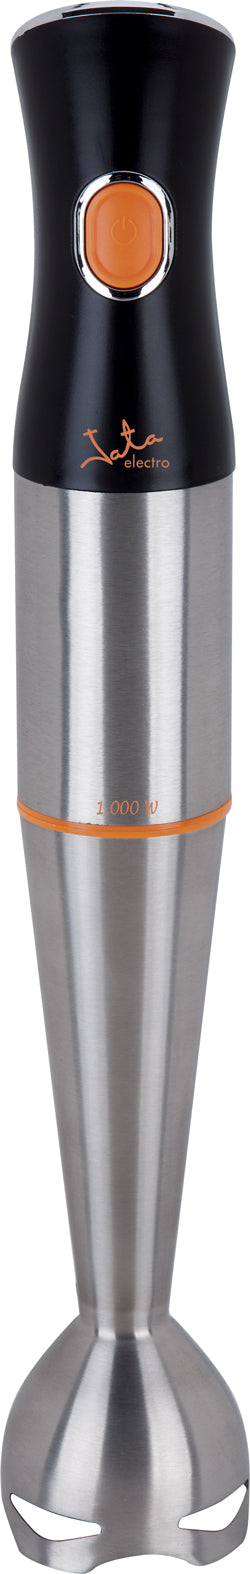 Blender with 1000W power and Detachable Shaft, Jata BT176 inox